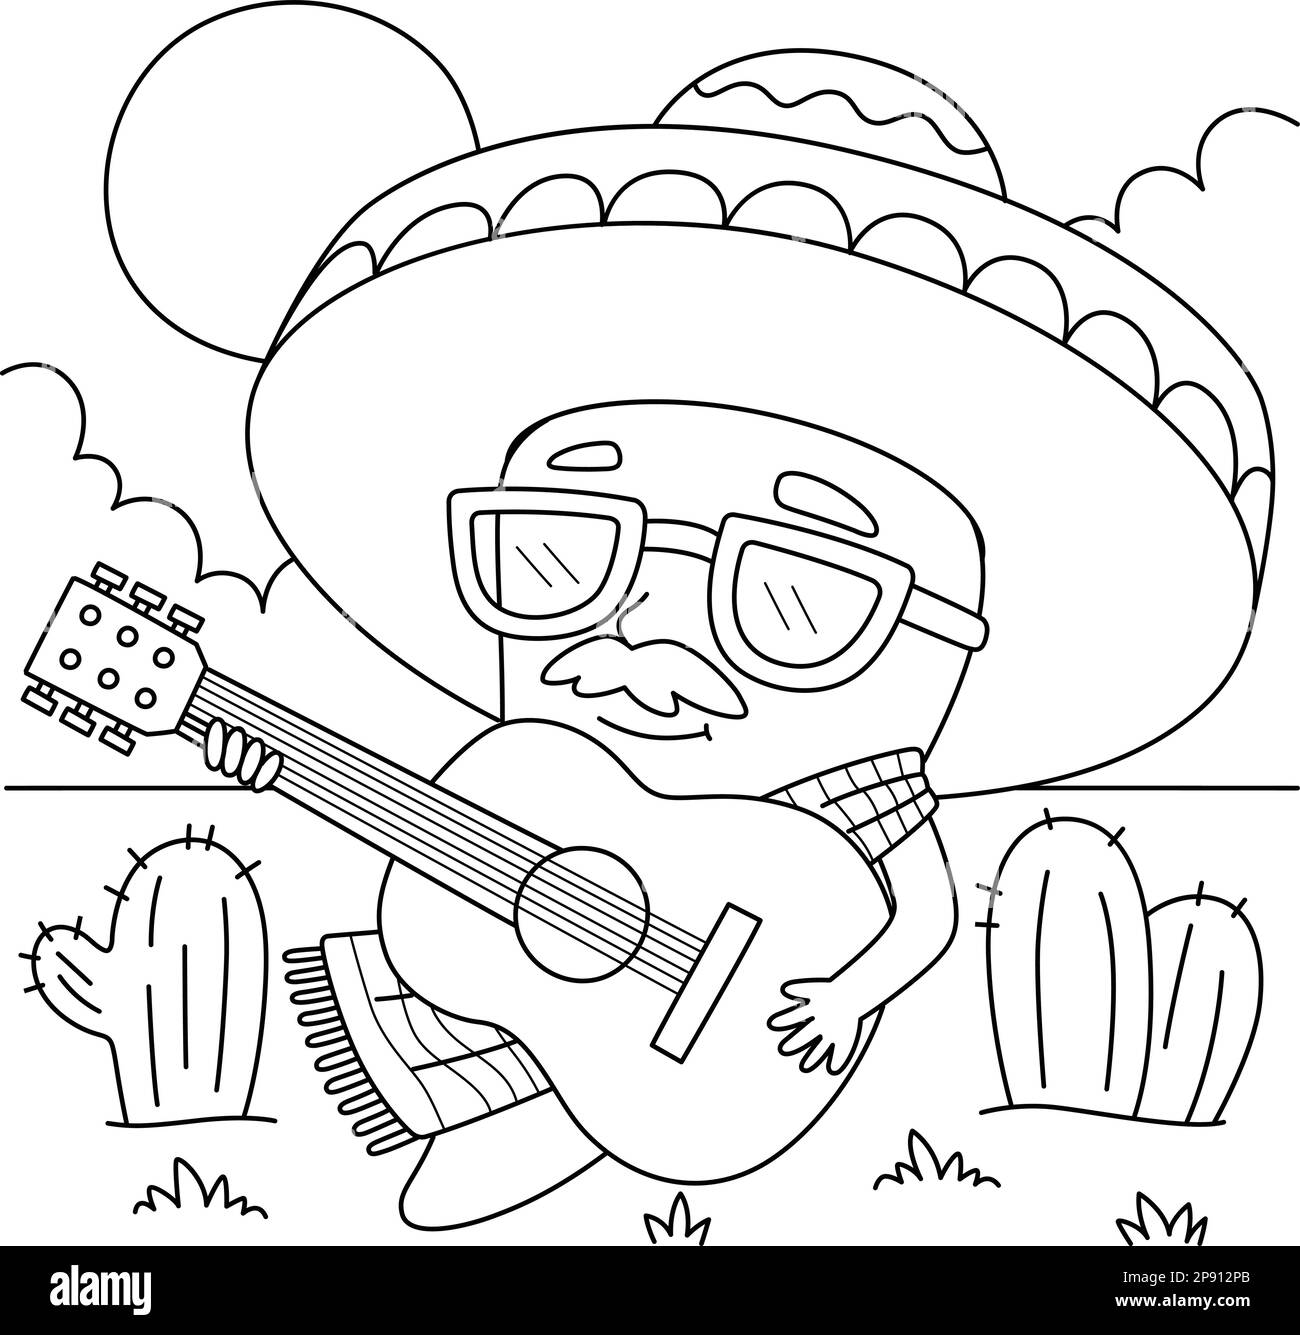 Cinco de Mayo Jalapeno Coloring Page for Kids Stock Vector Image & Art ...